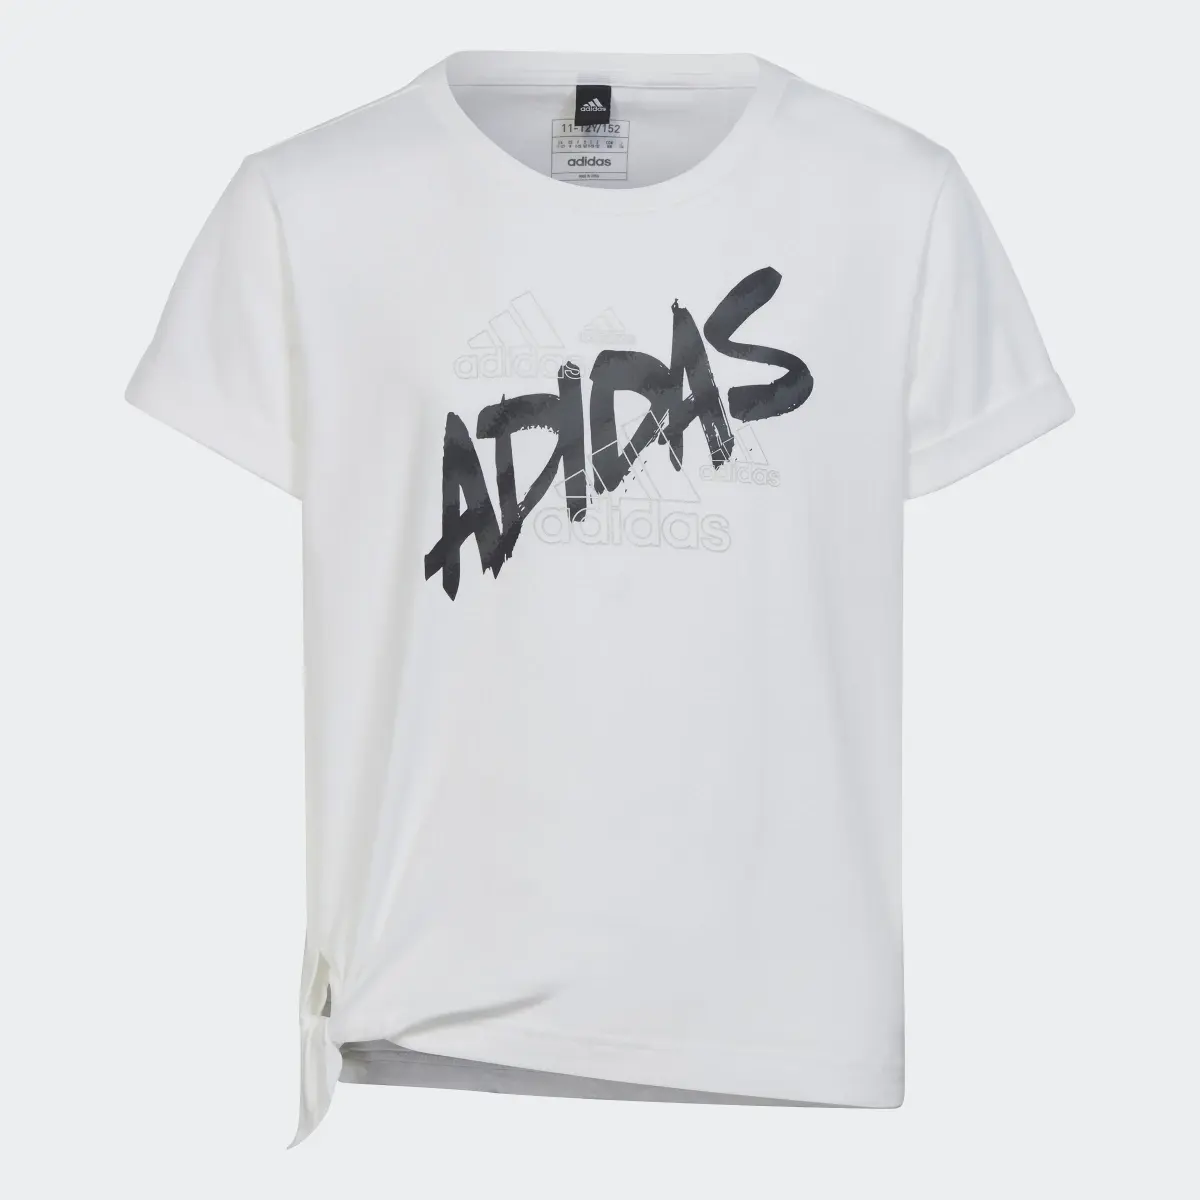 Adidas T-shirt noué Danse. 1